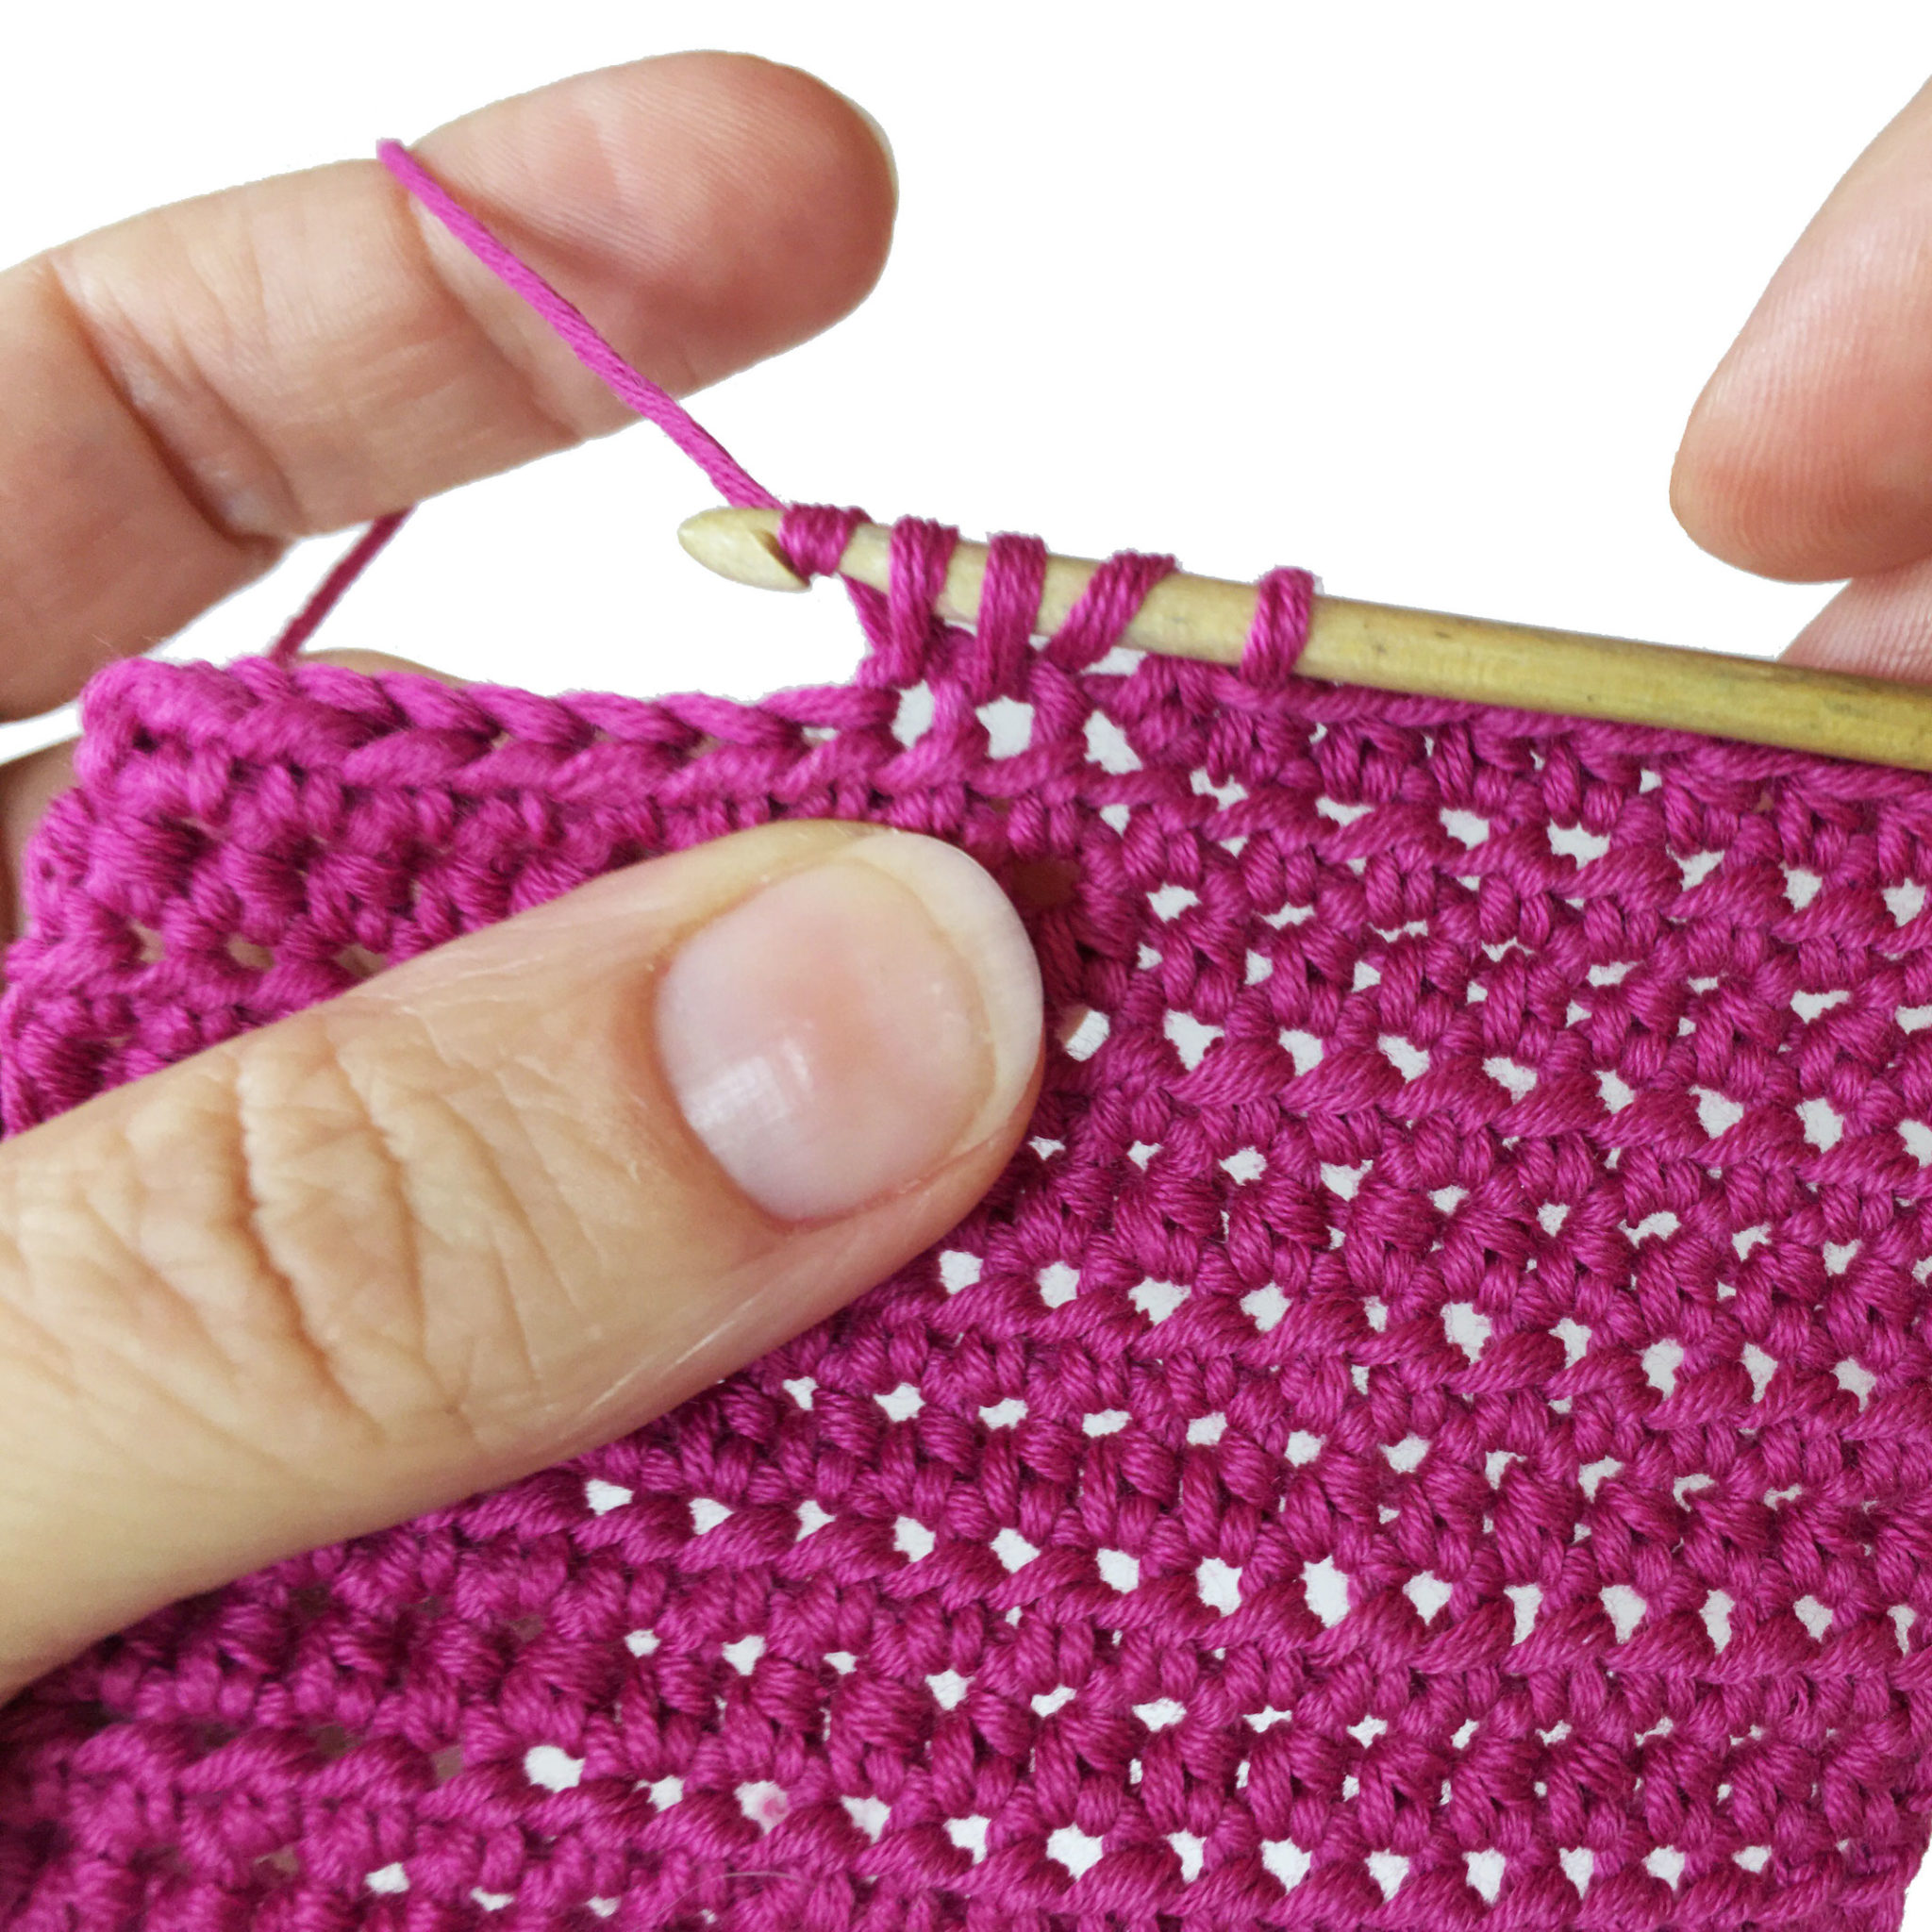 HOW TO: Decreasing crochet stitches⎟Raven's Crochet